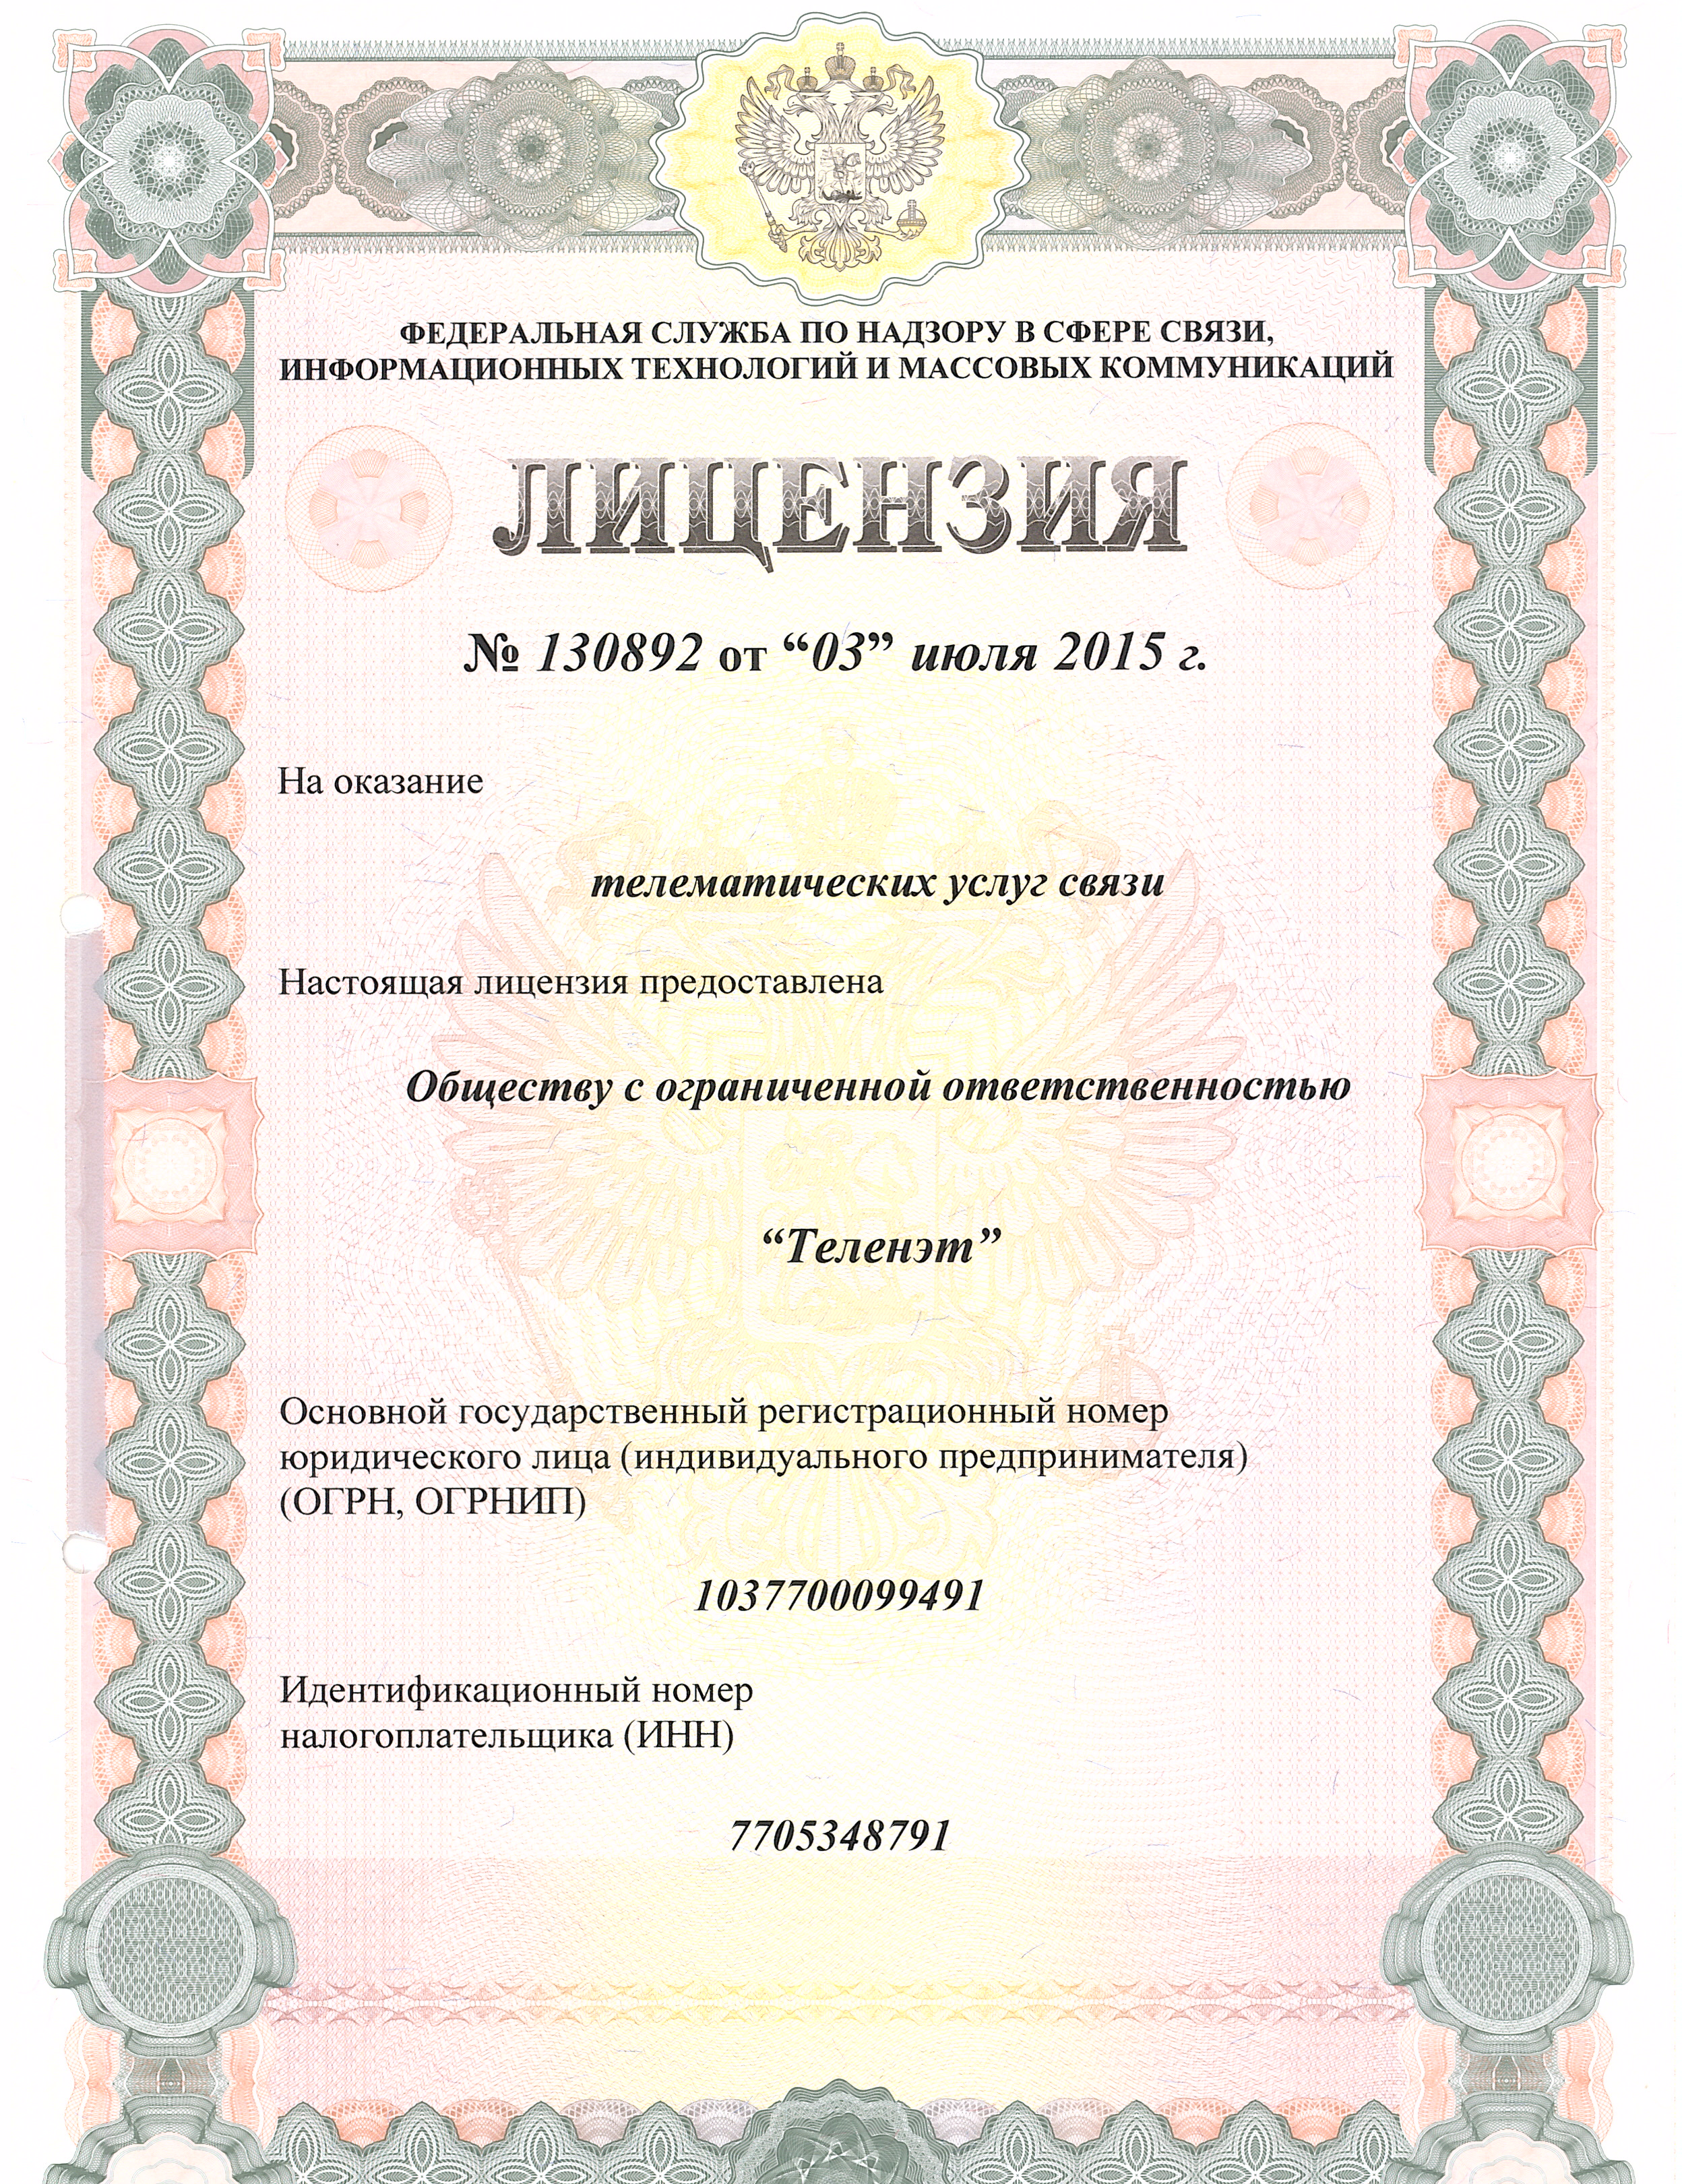 Предоставление телематических услуг связи (Москва и Московская обл.) № 130892